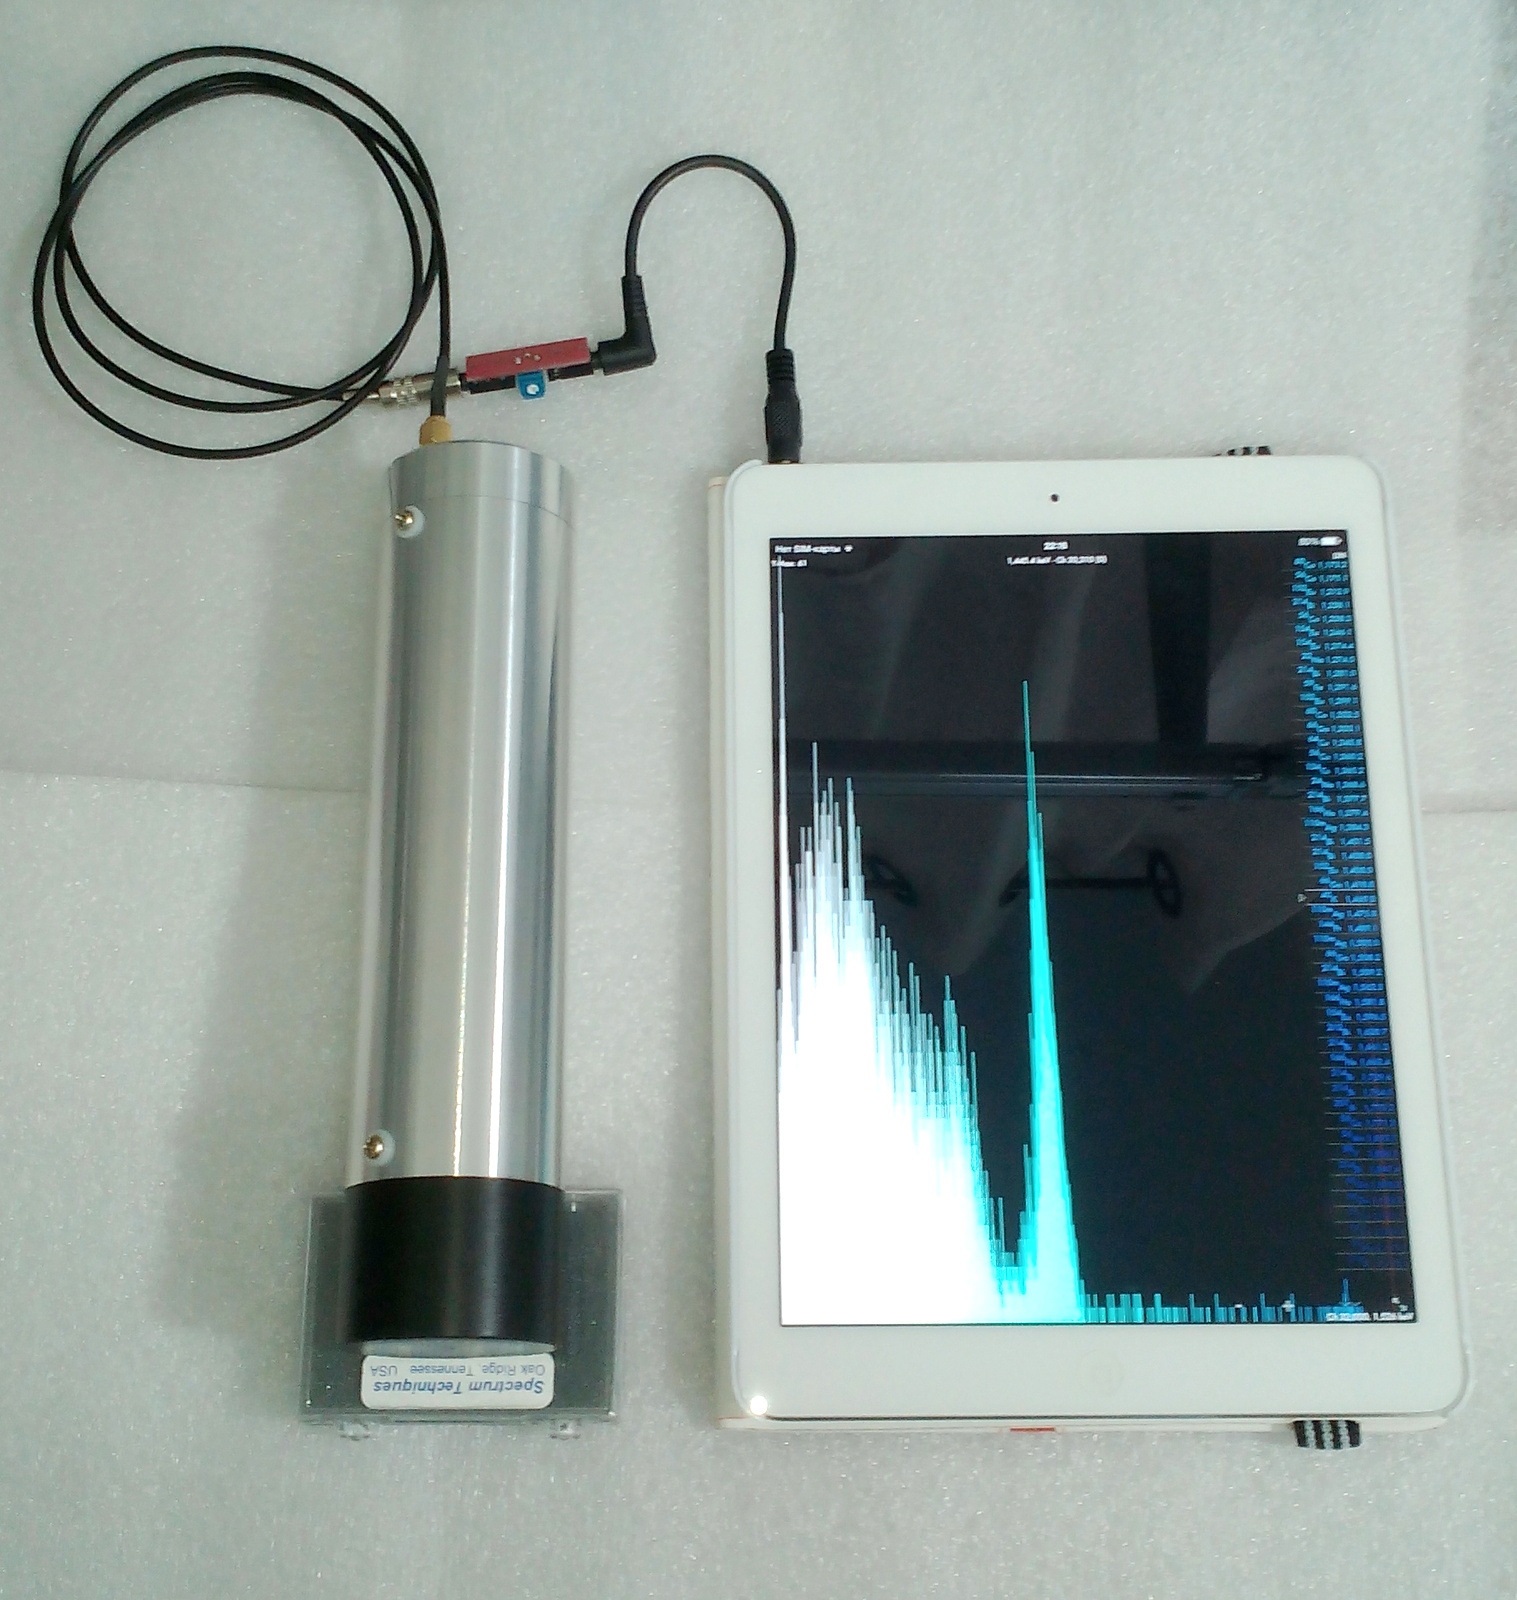 DIY Gamma RaY Spectrometer for iPad / Computer